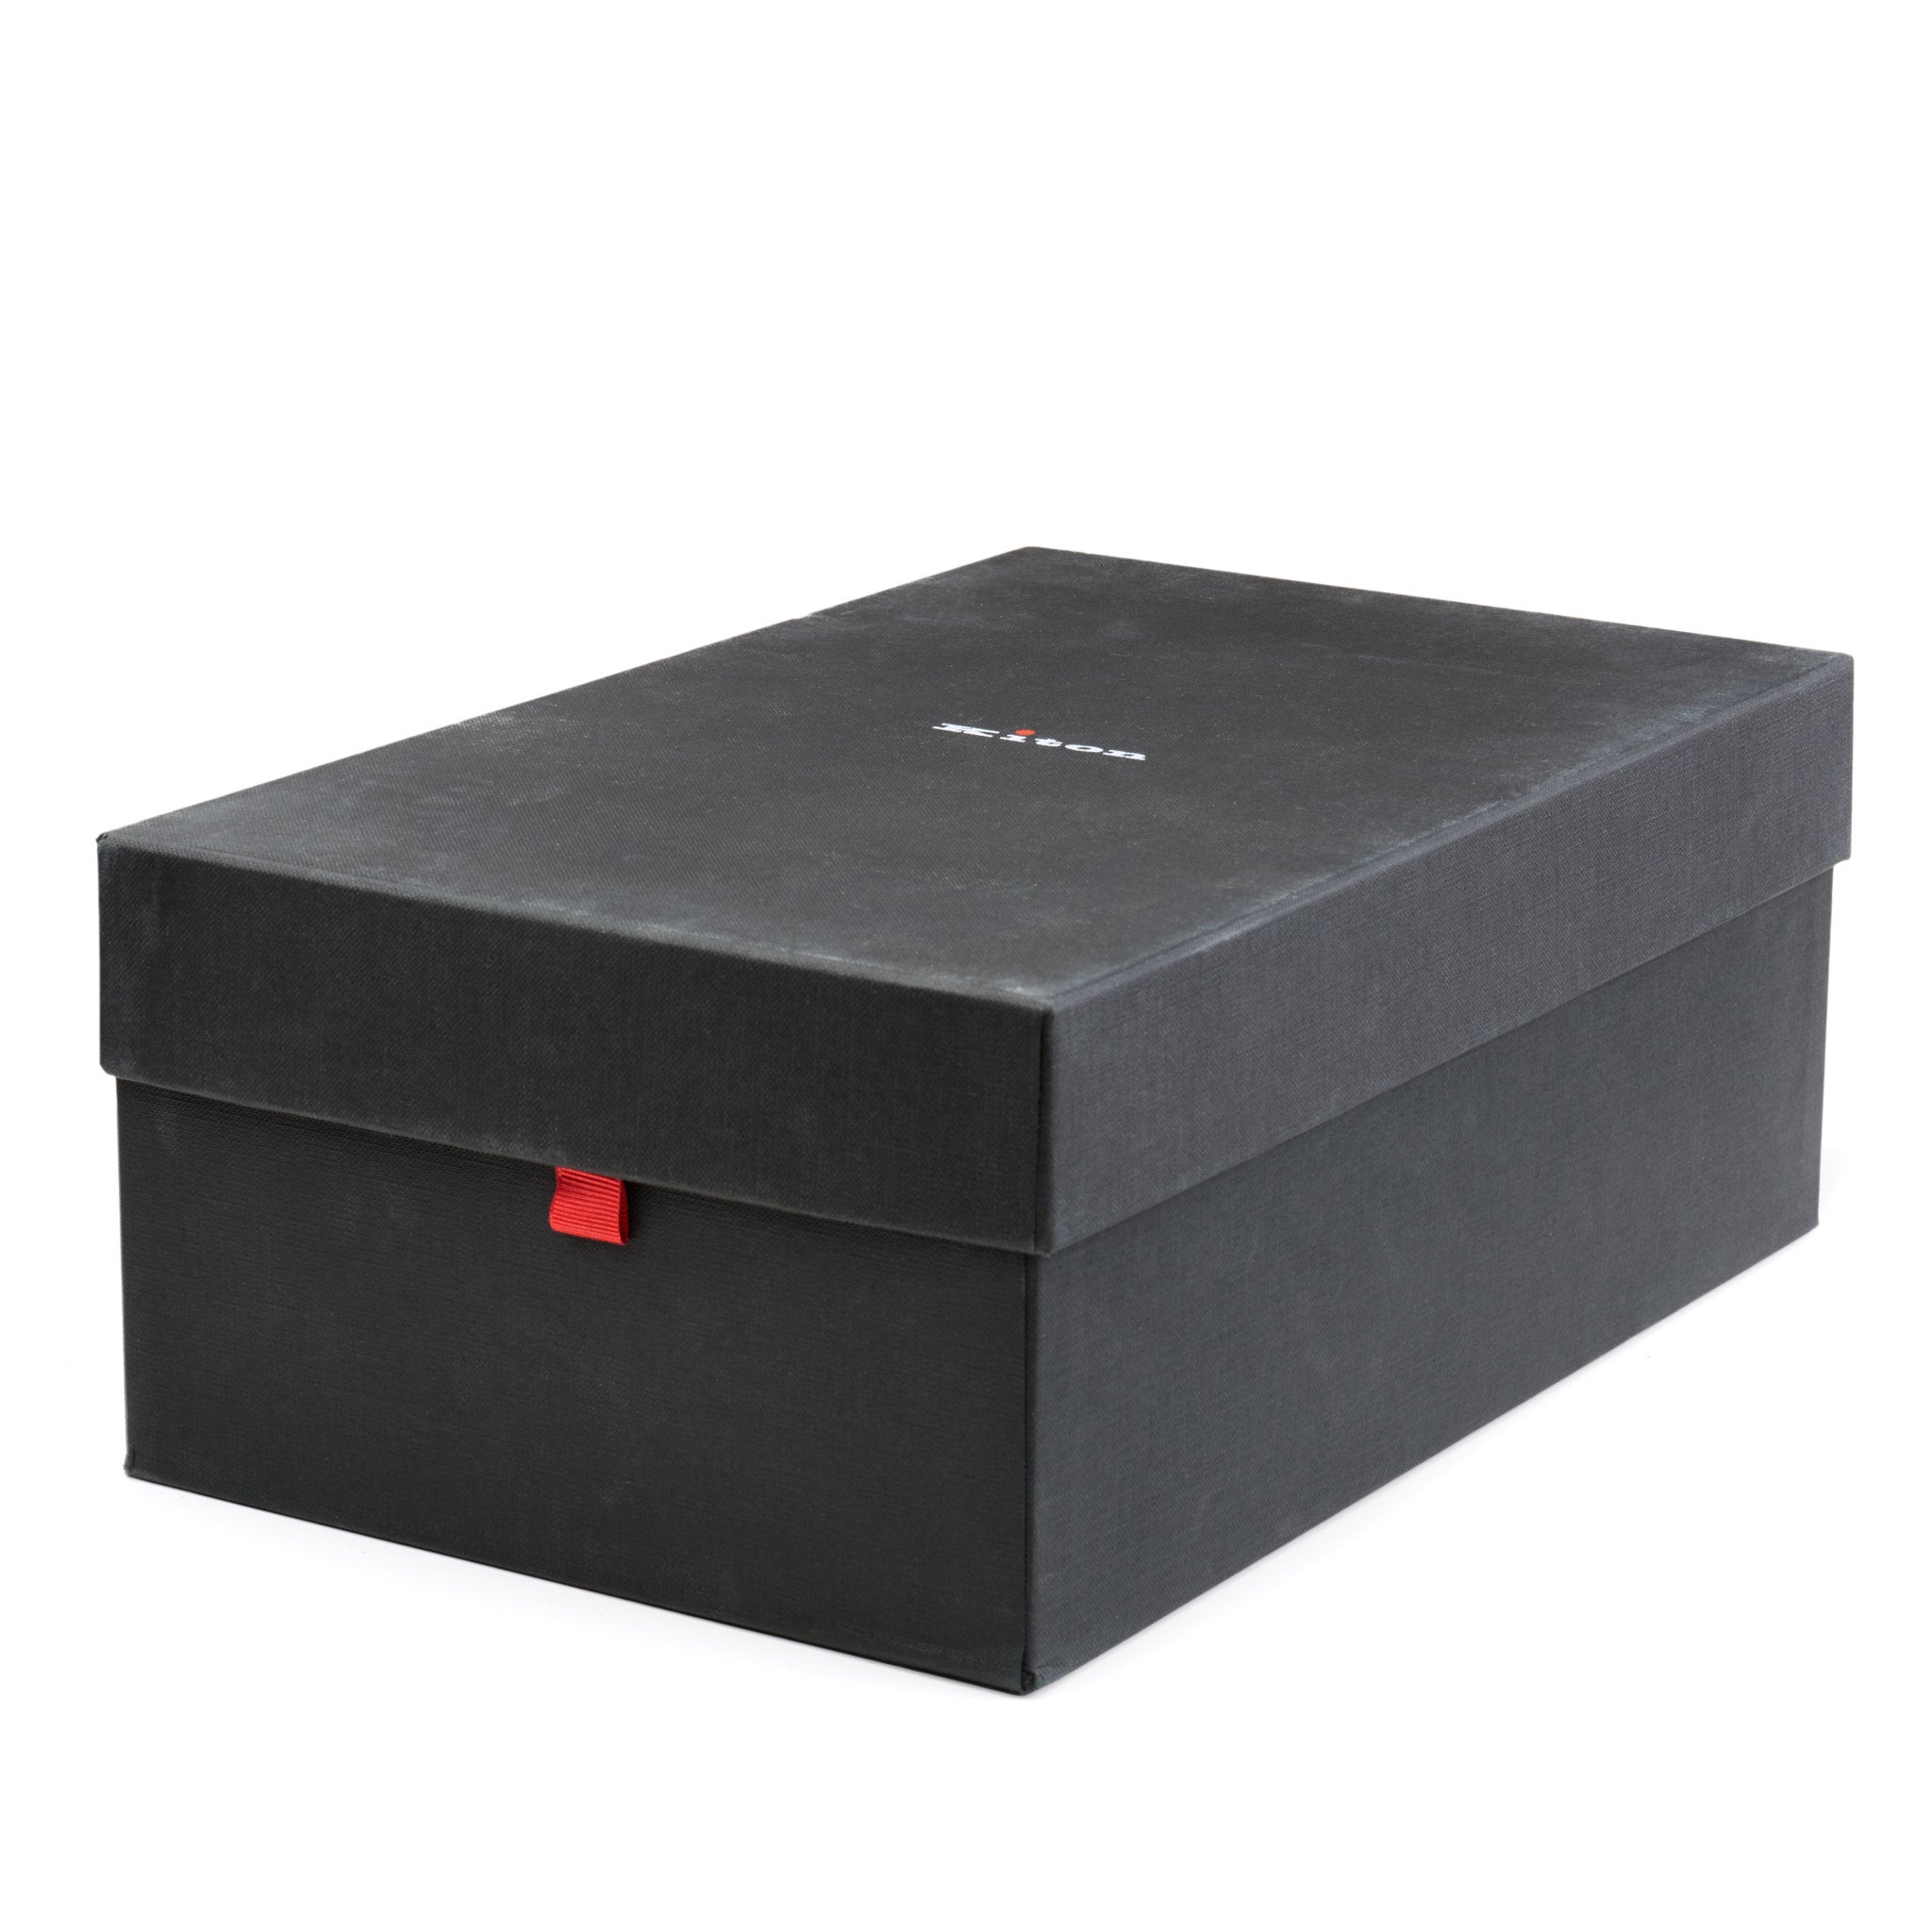 KITON Napoli Handmade Black Calfskin Leather Wing Tip Loafer Shoes NEW Box US 10 KITON